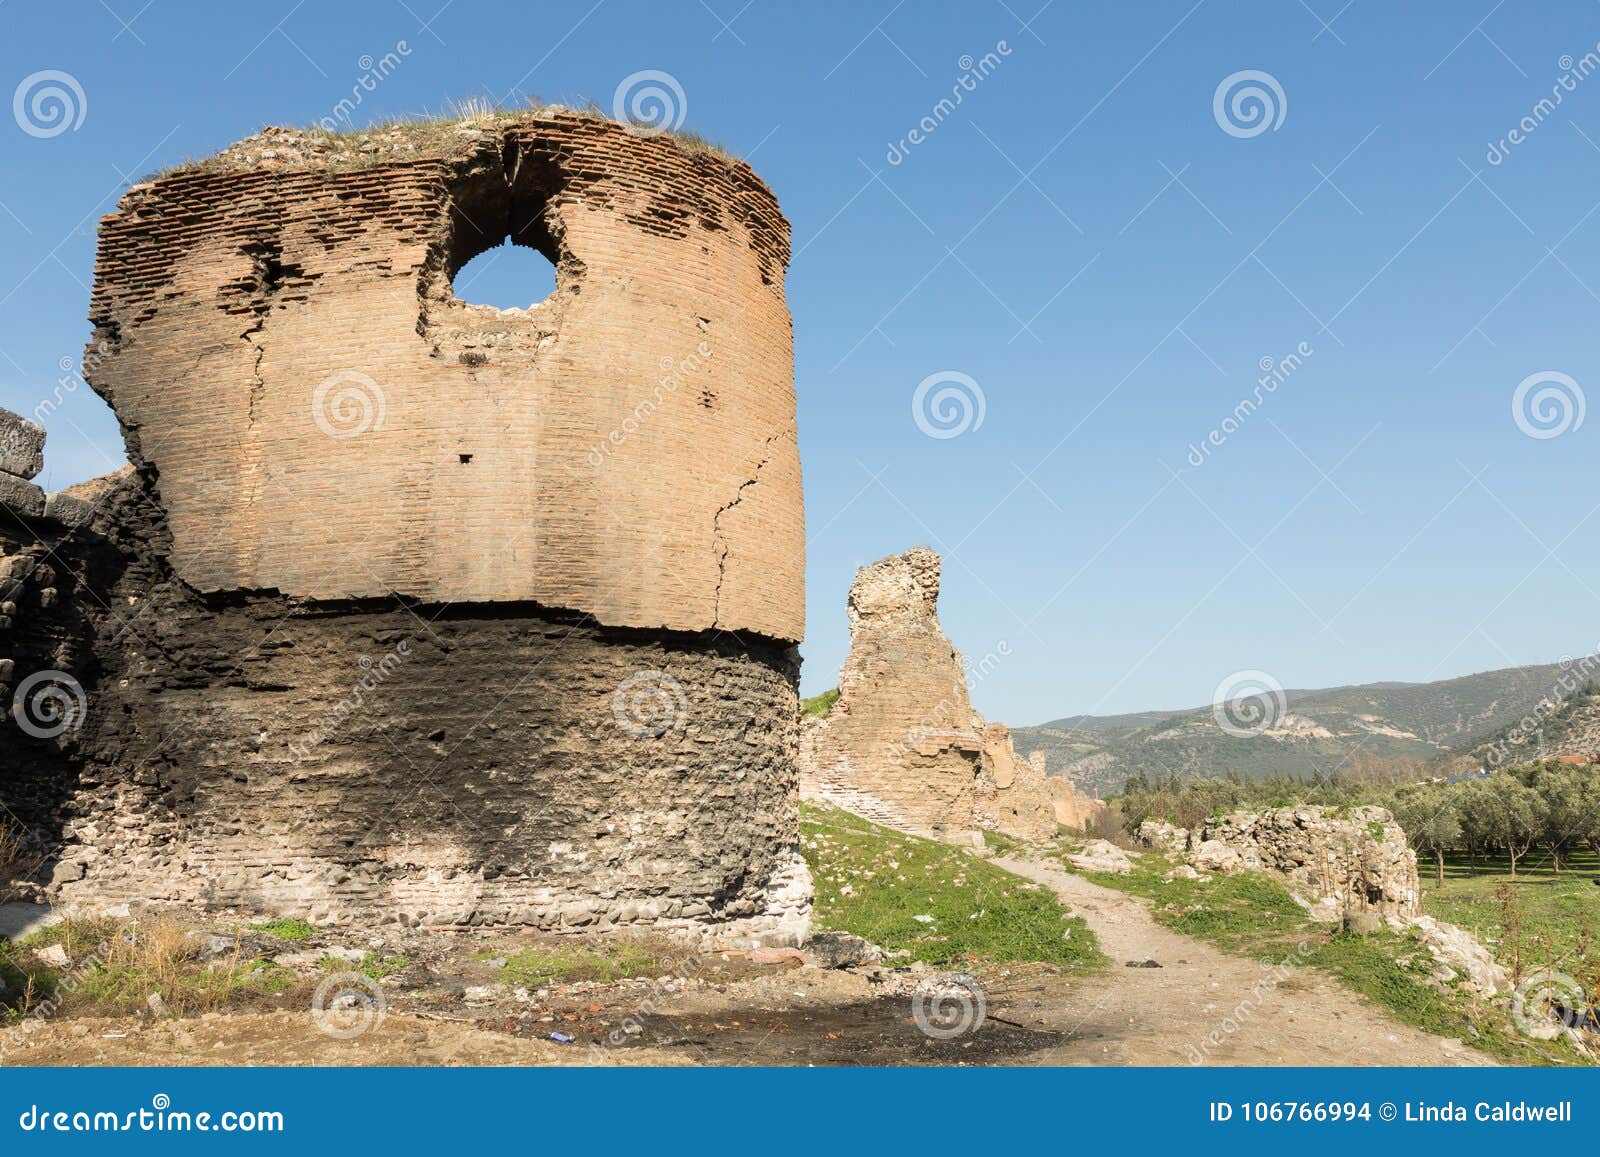 ancient roman walls surrounding iznik nicea